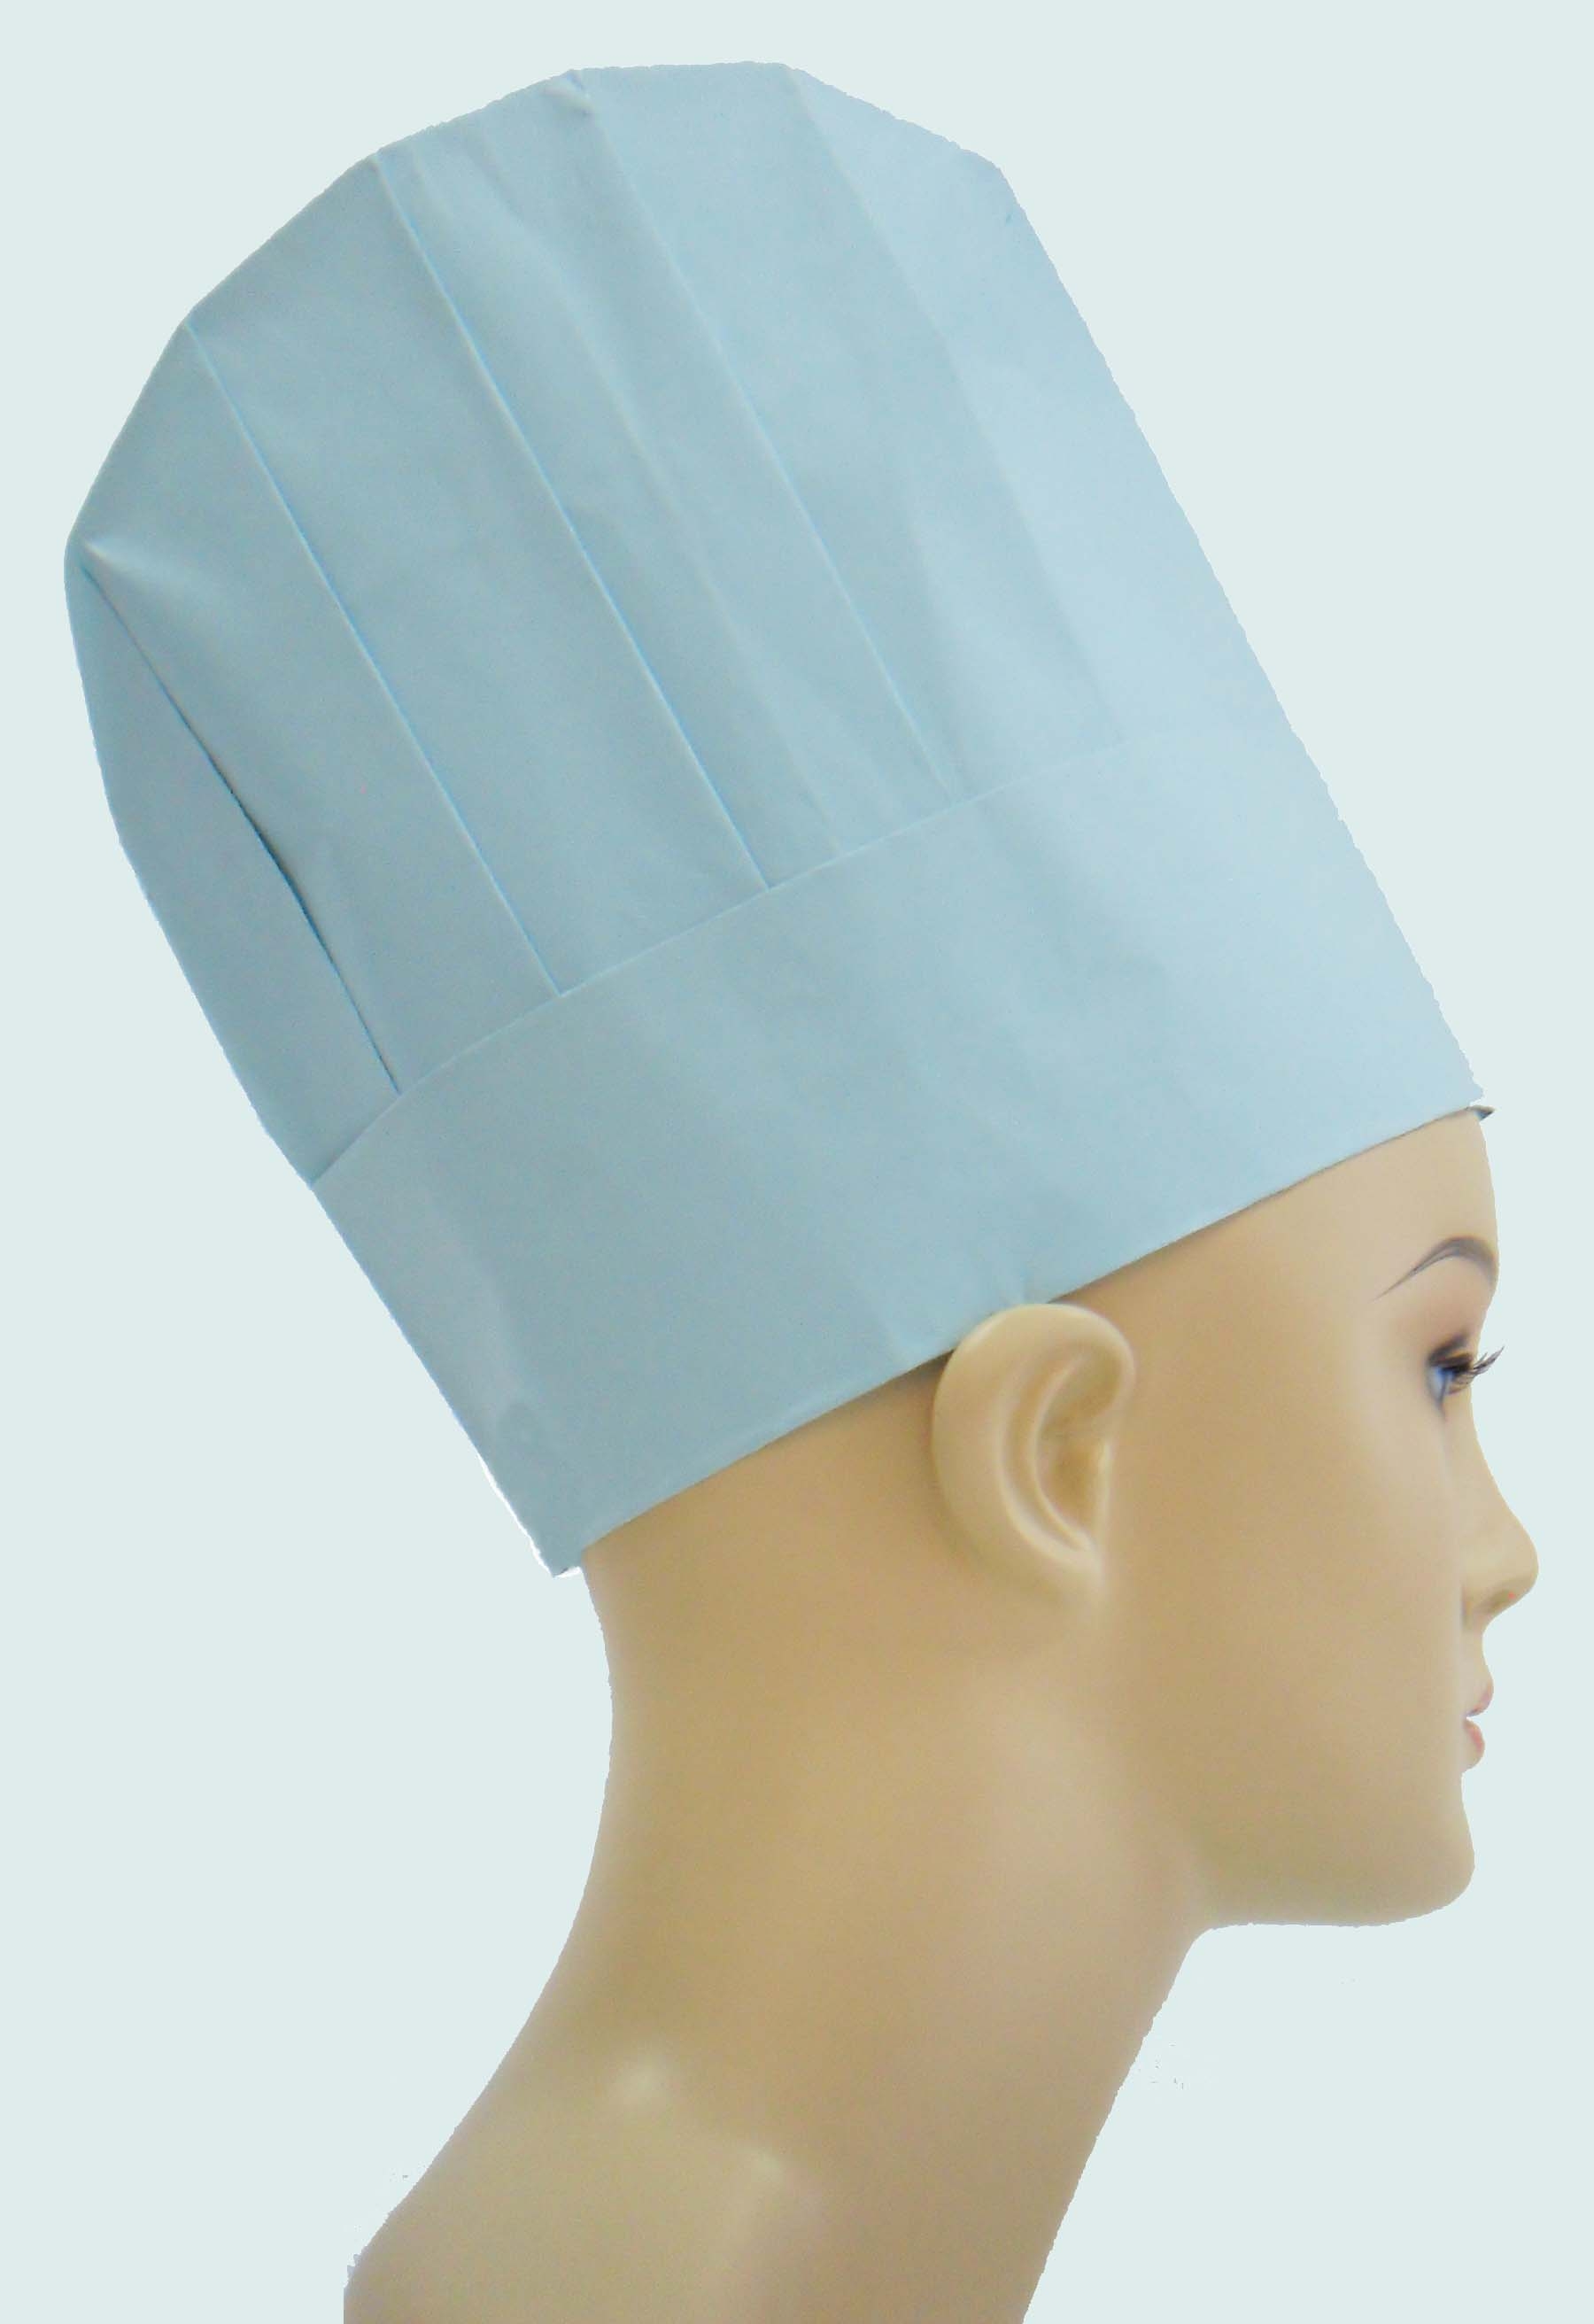 Esoar 1 cocina catering restaurantes 100 gorros desechables para el pelo para alimentos azul no tejidos 